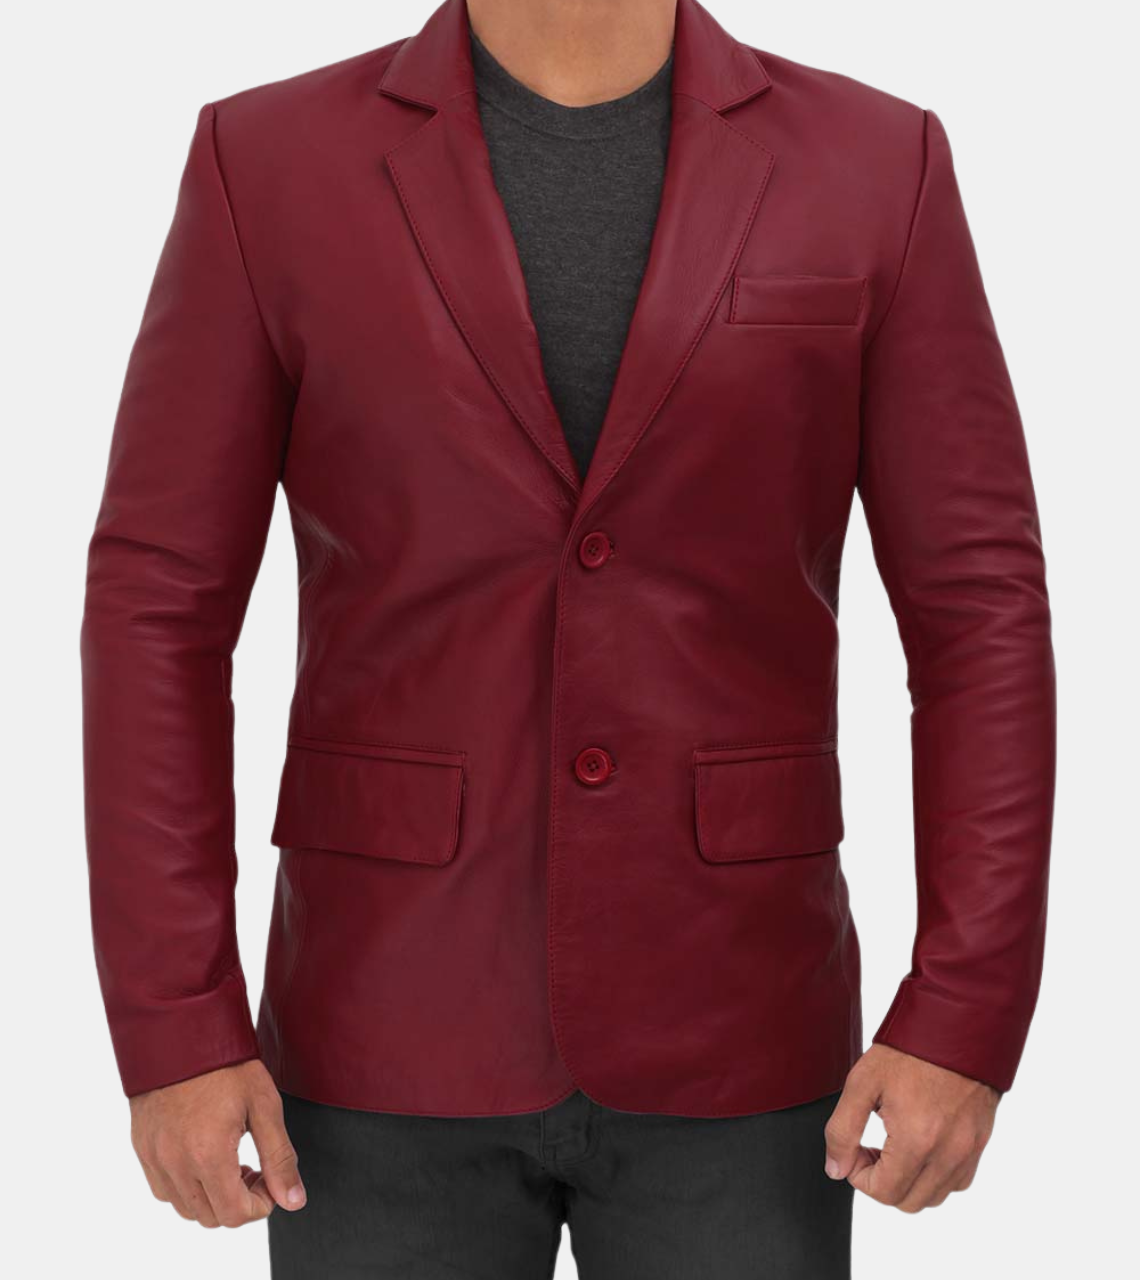 Pierce Plum Red Leather Blazer For Men's